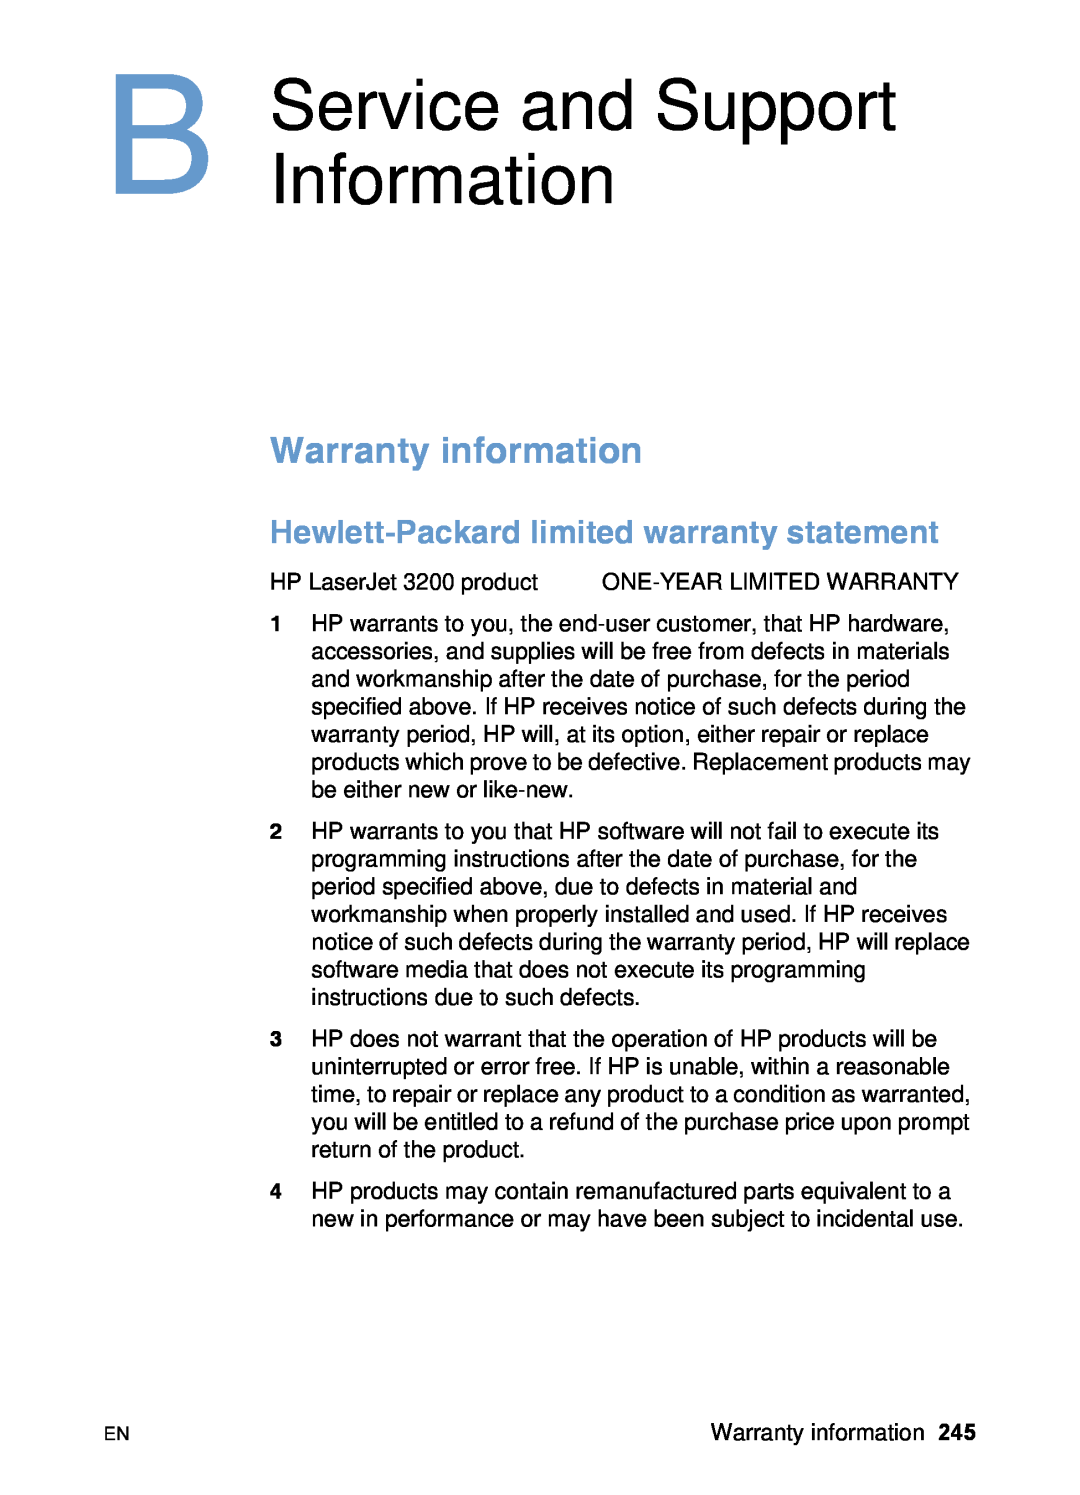 HP 3200 manual Service and Support Information, Warranty information, Hewlett-Packard limited warranty statement 